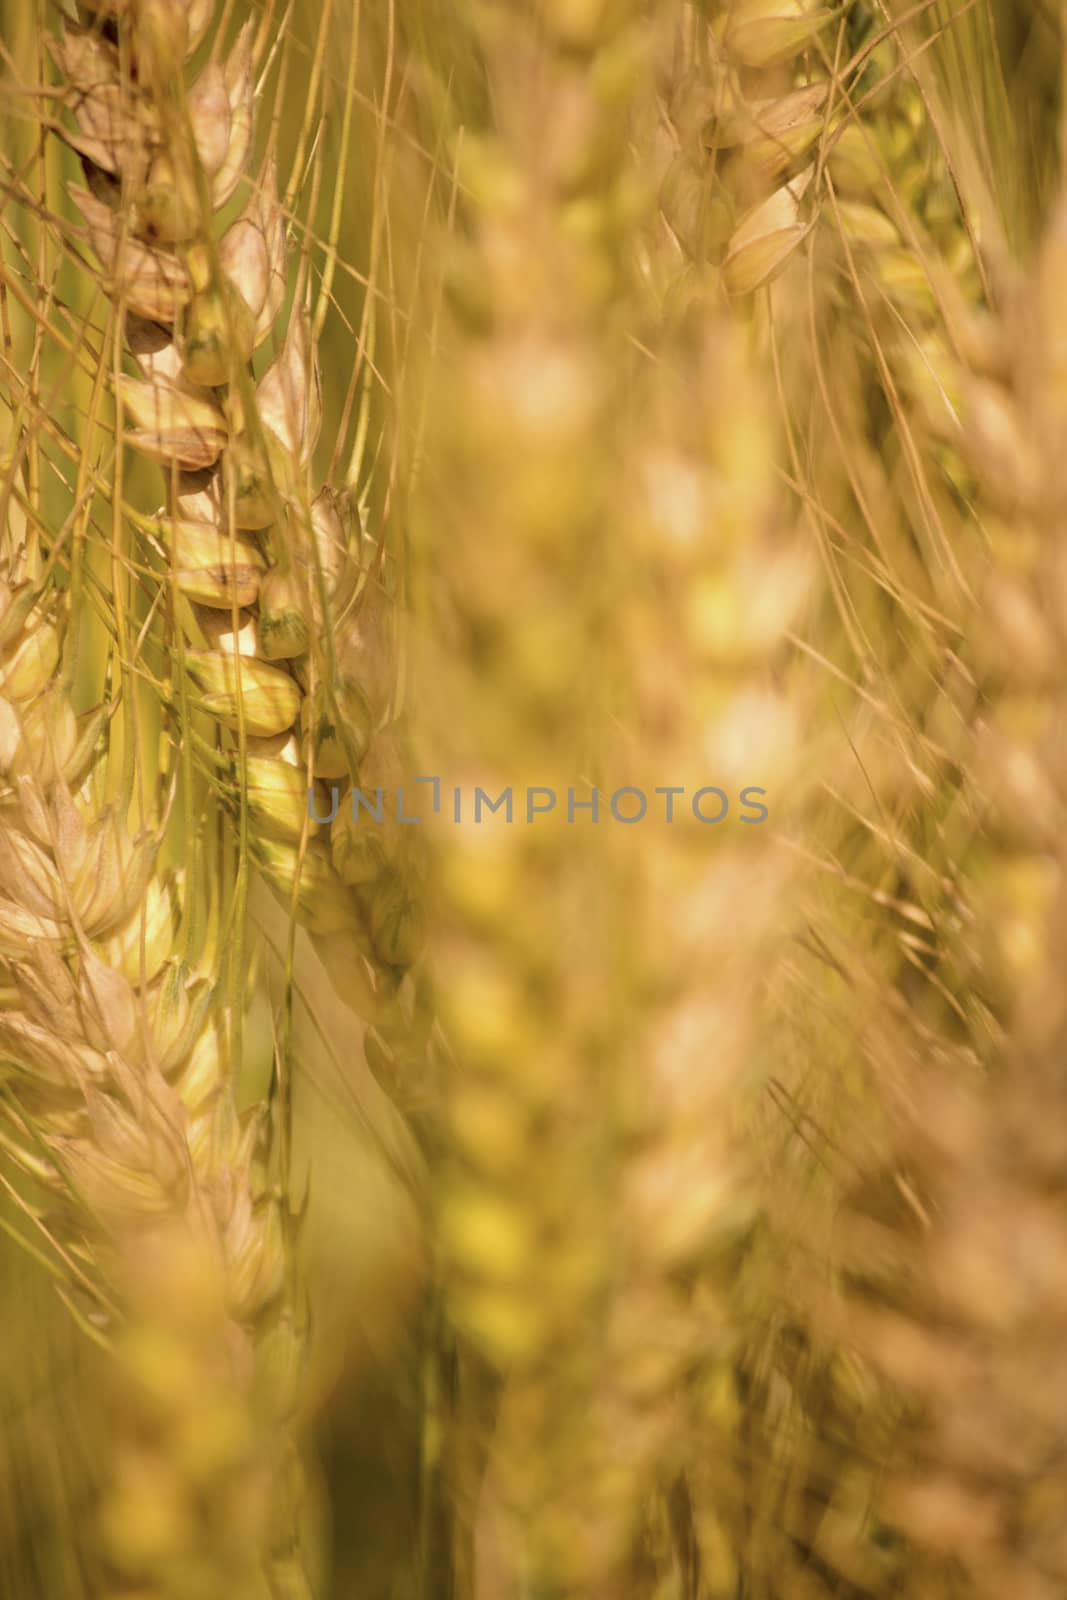 Golden wheat field, Golden wheat close up, Background of ripening golden wheat field